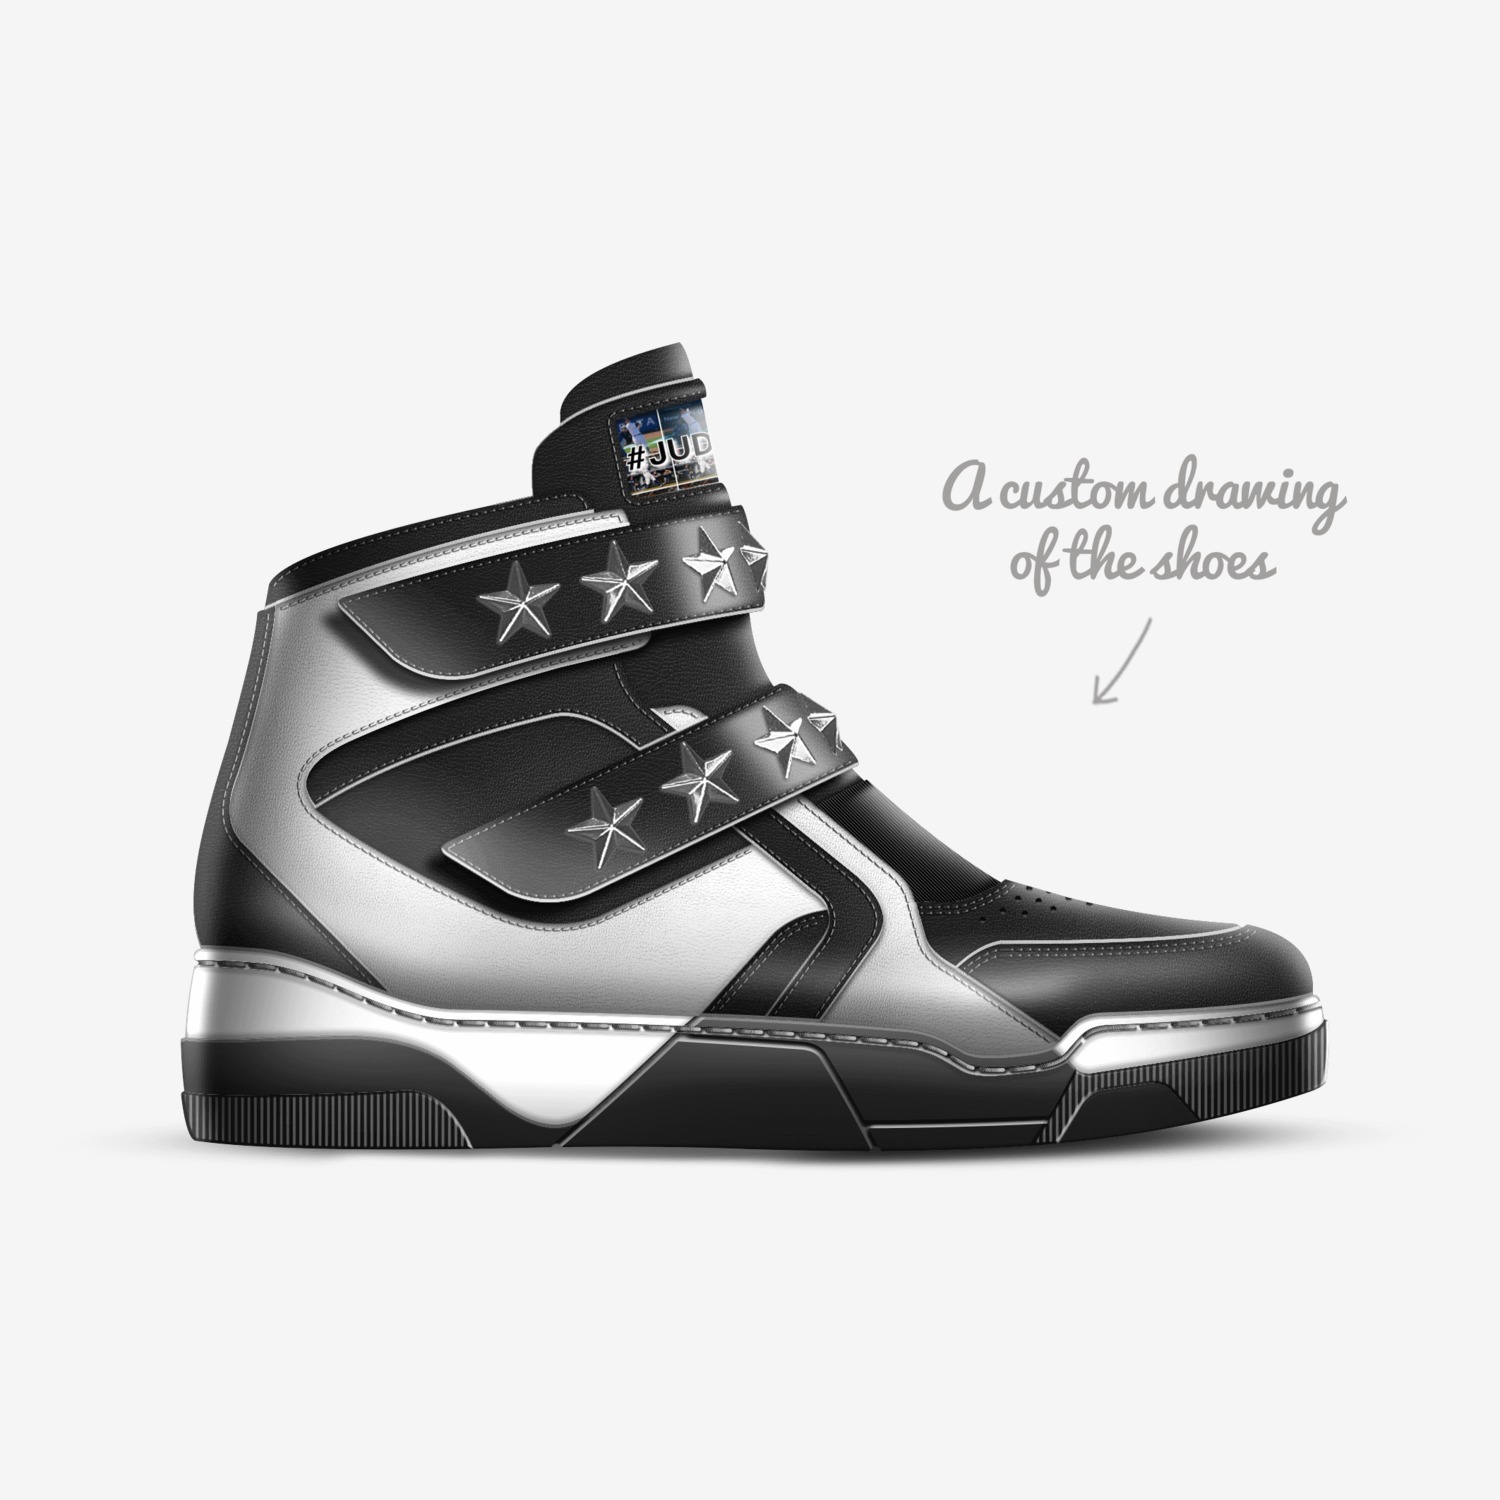 JUDGE 99 | A Custom Shoe concept by Junius Clark